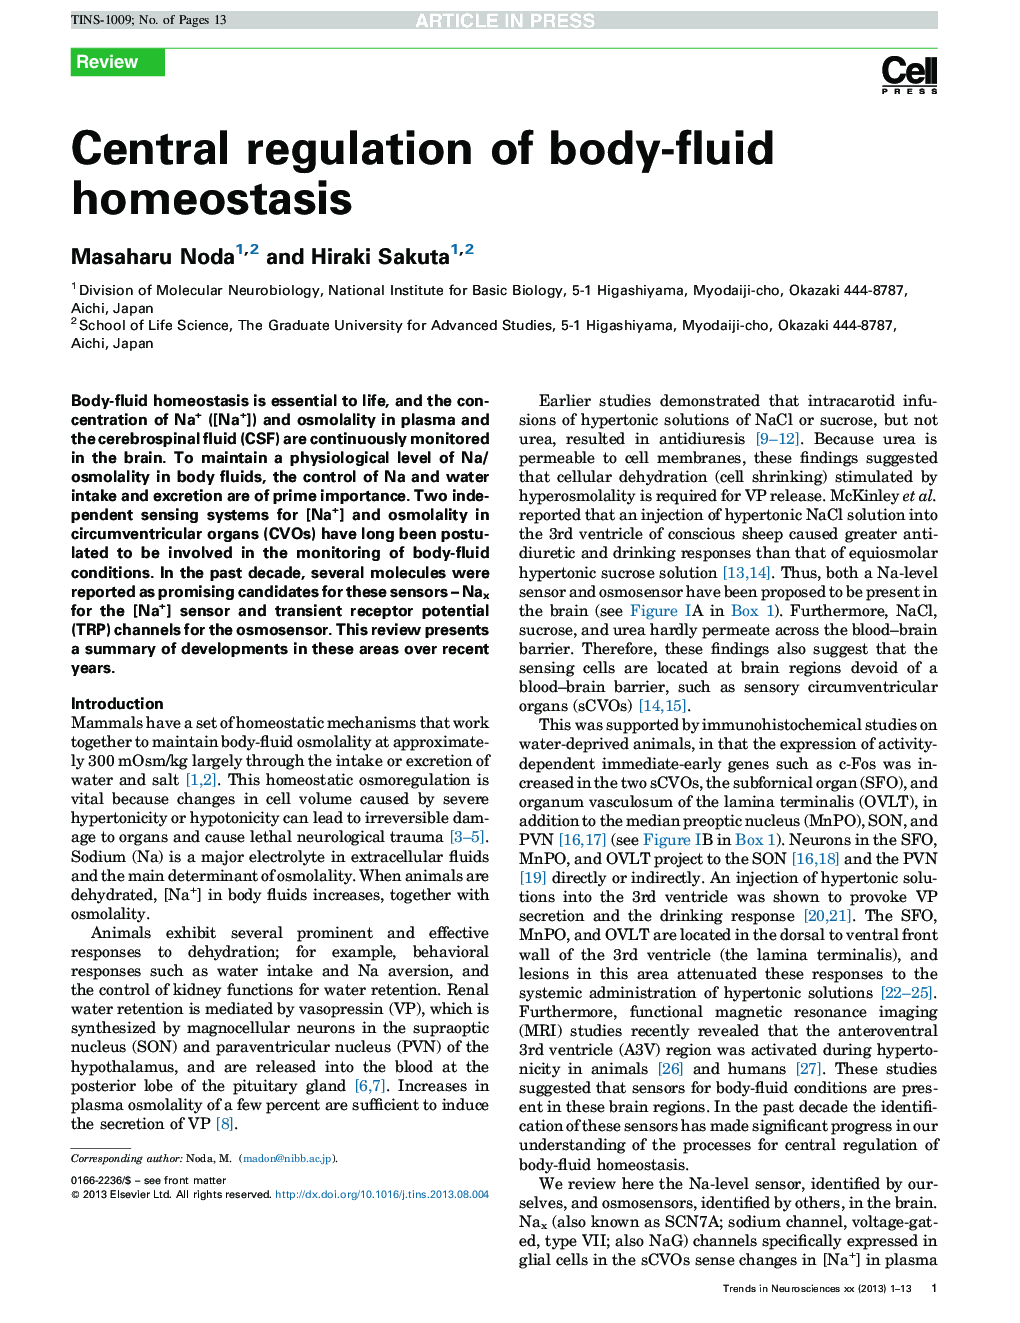 Central regulation of body-fluid homeostasis